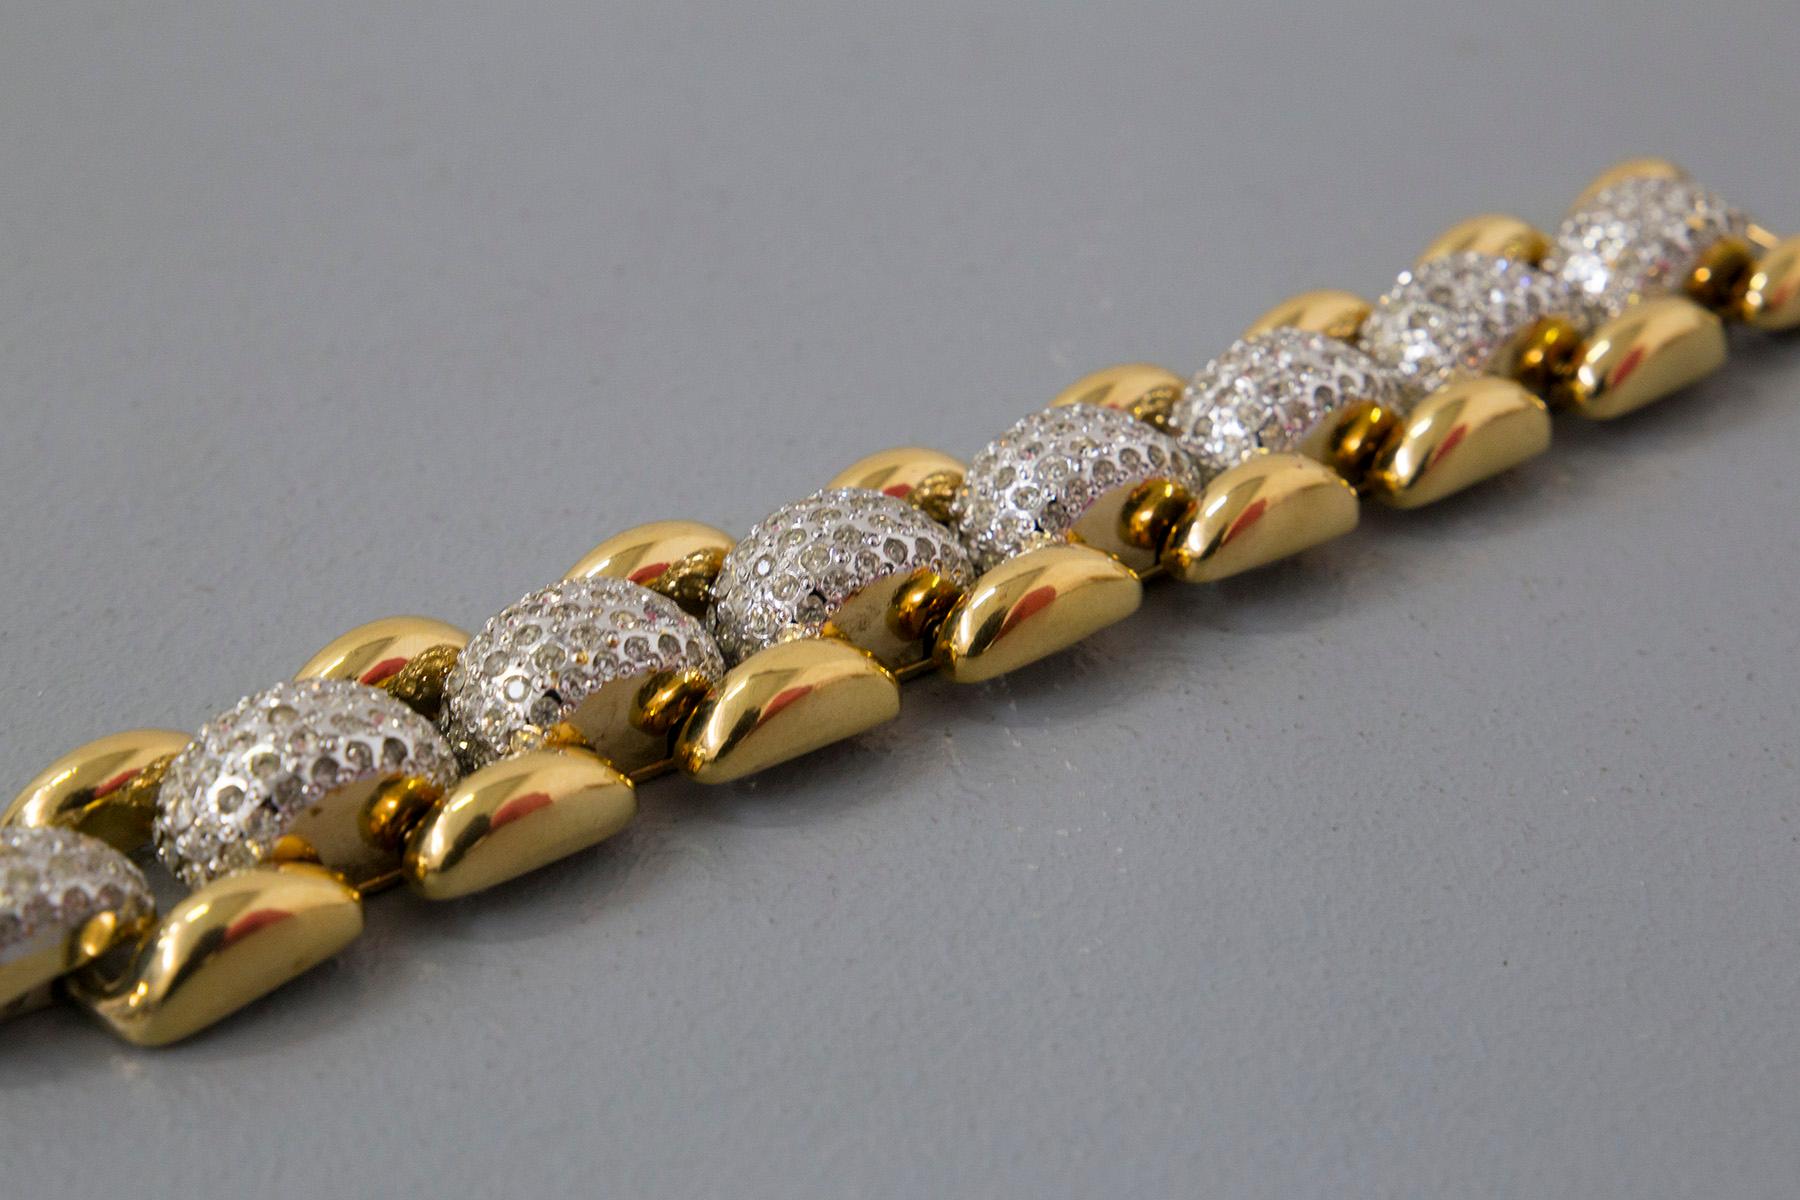 Women's Vintage Yves Saint Laurent bracelet in gold-plated metal